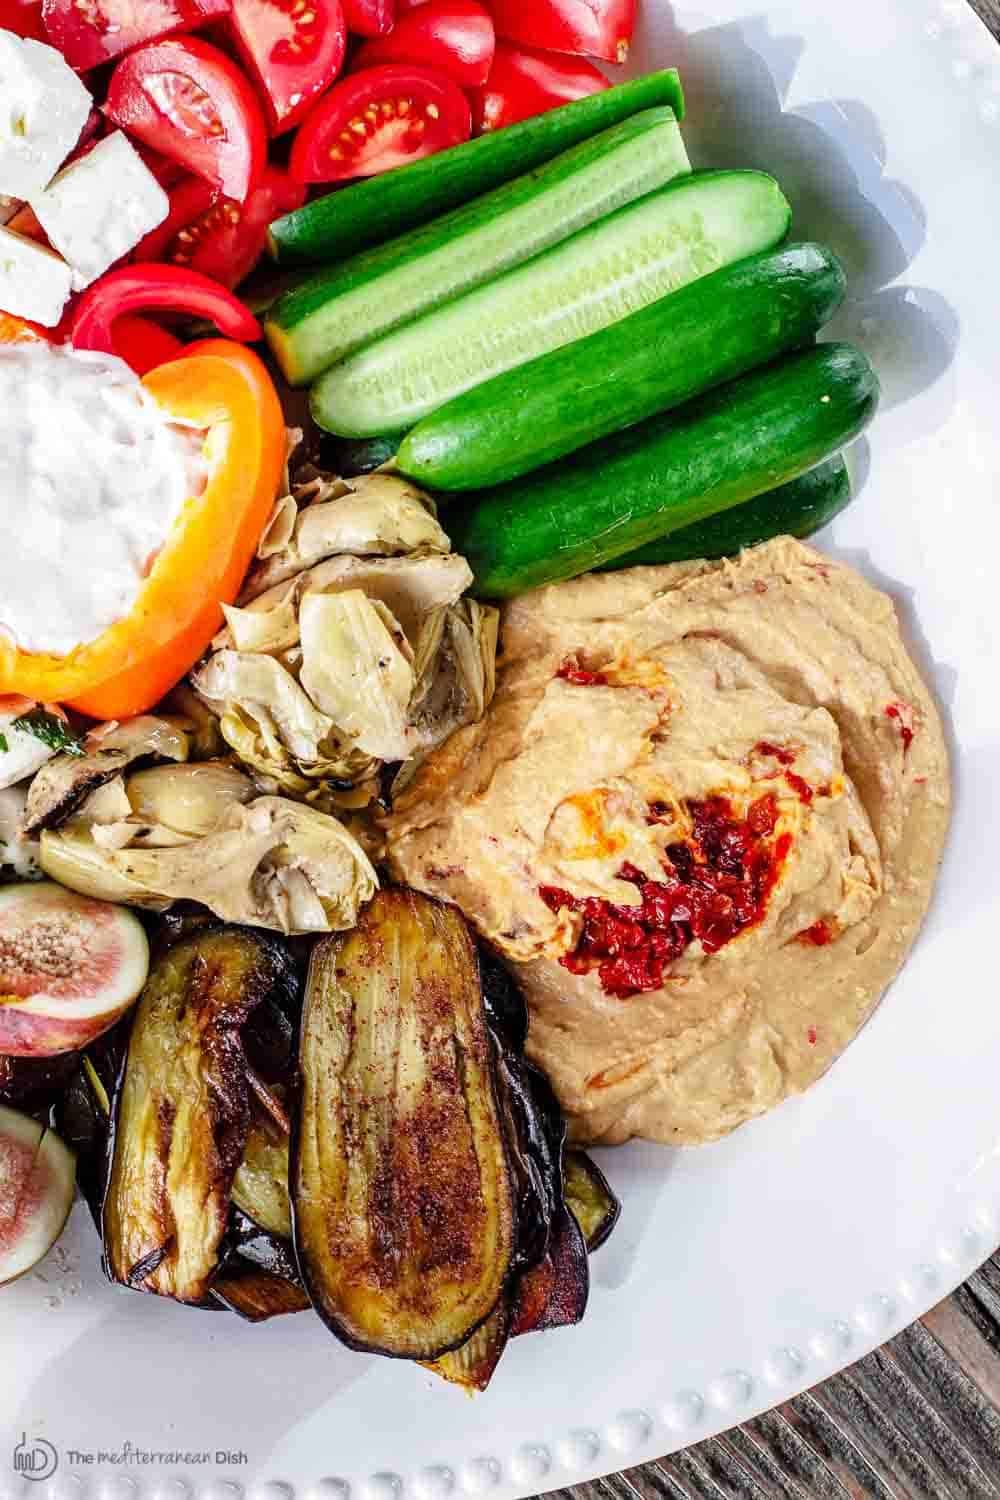 Mezze party platter with hummus